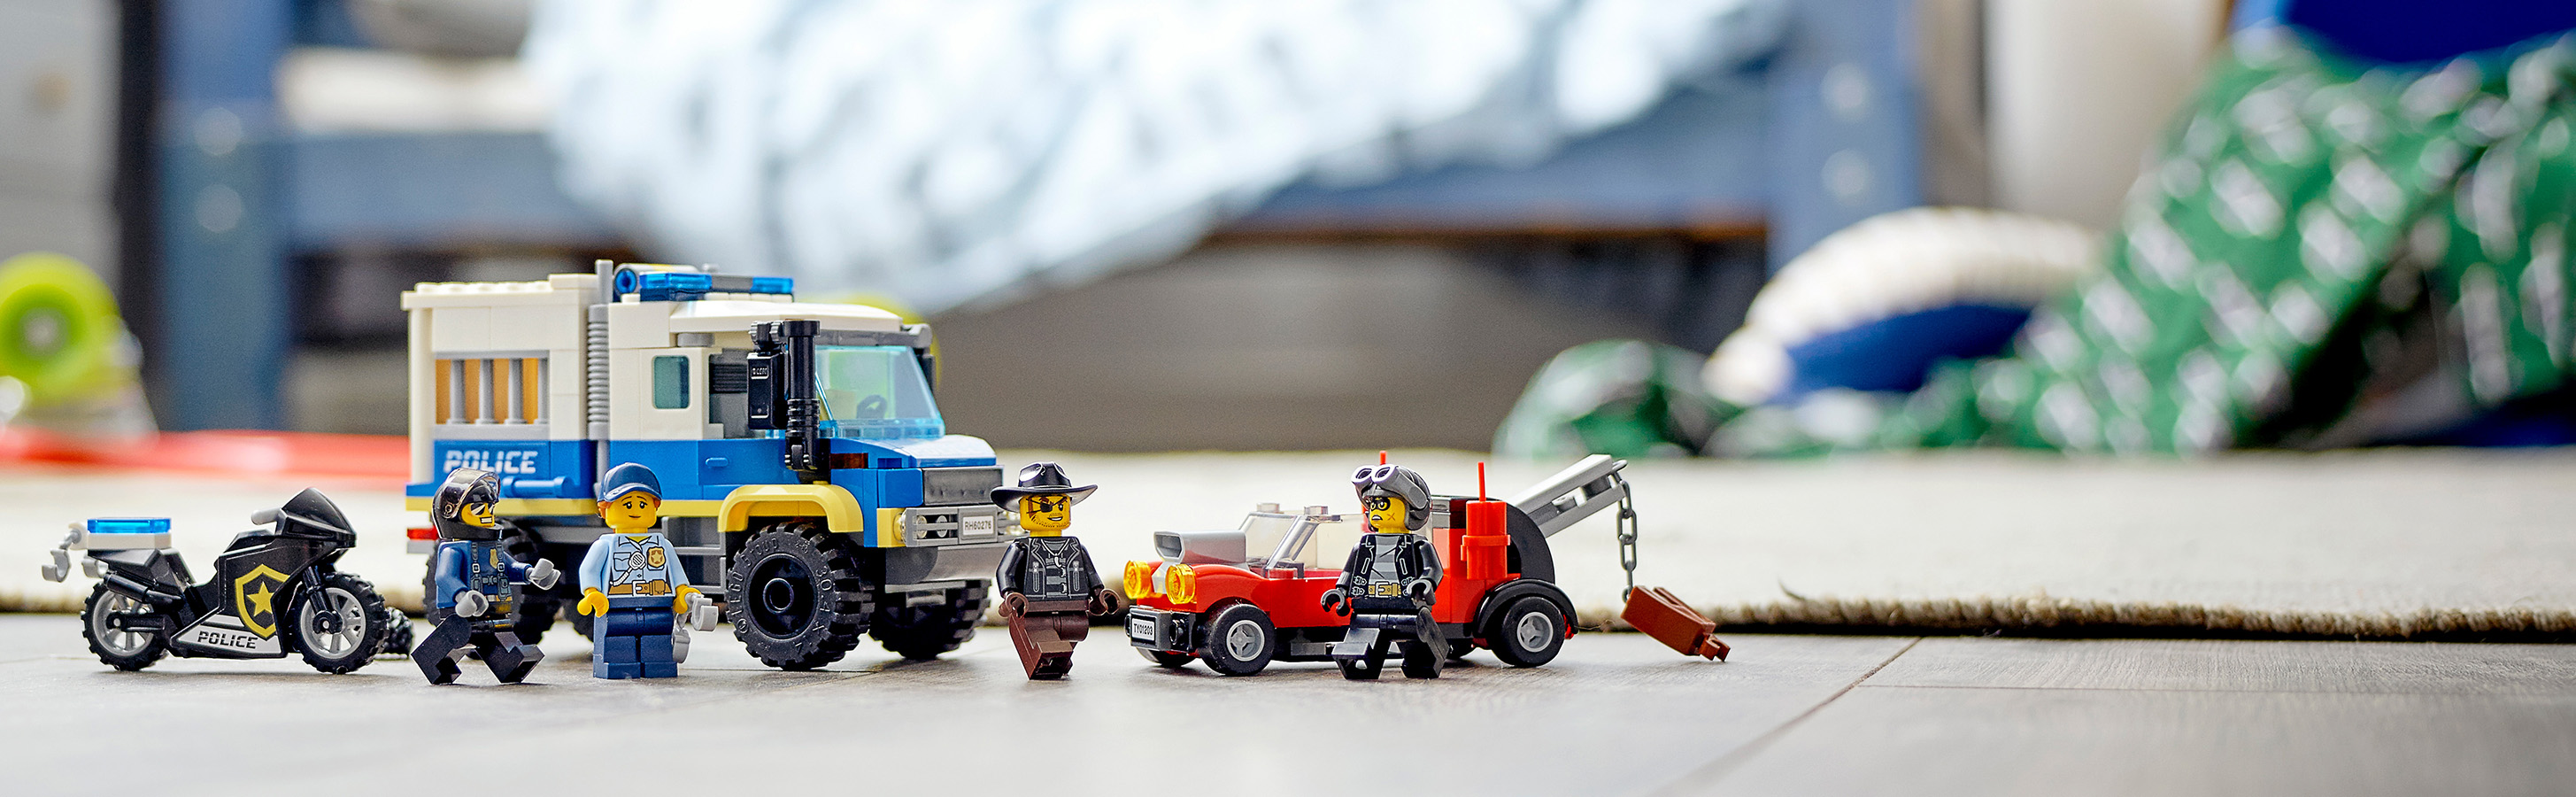 LEGO® City Adventures TV series characters